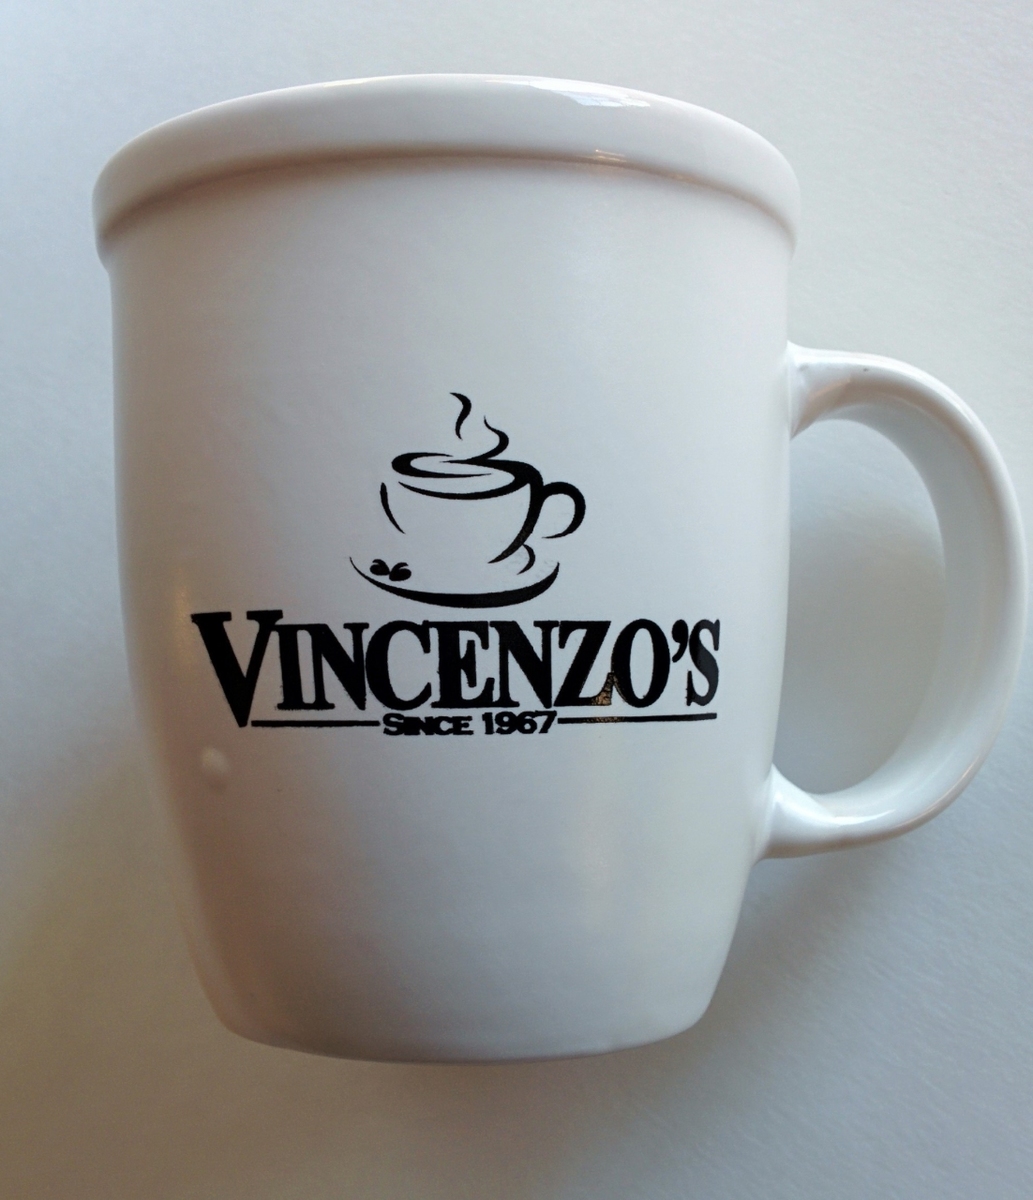 Vincenzo's Coffee Cups